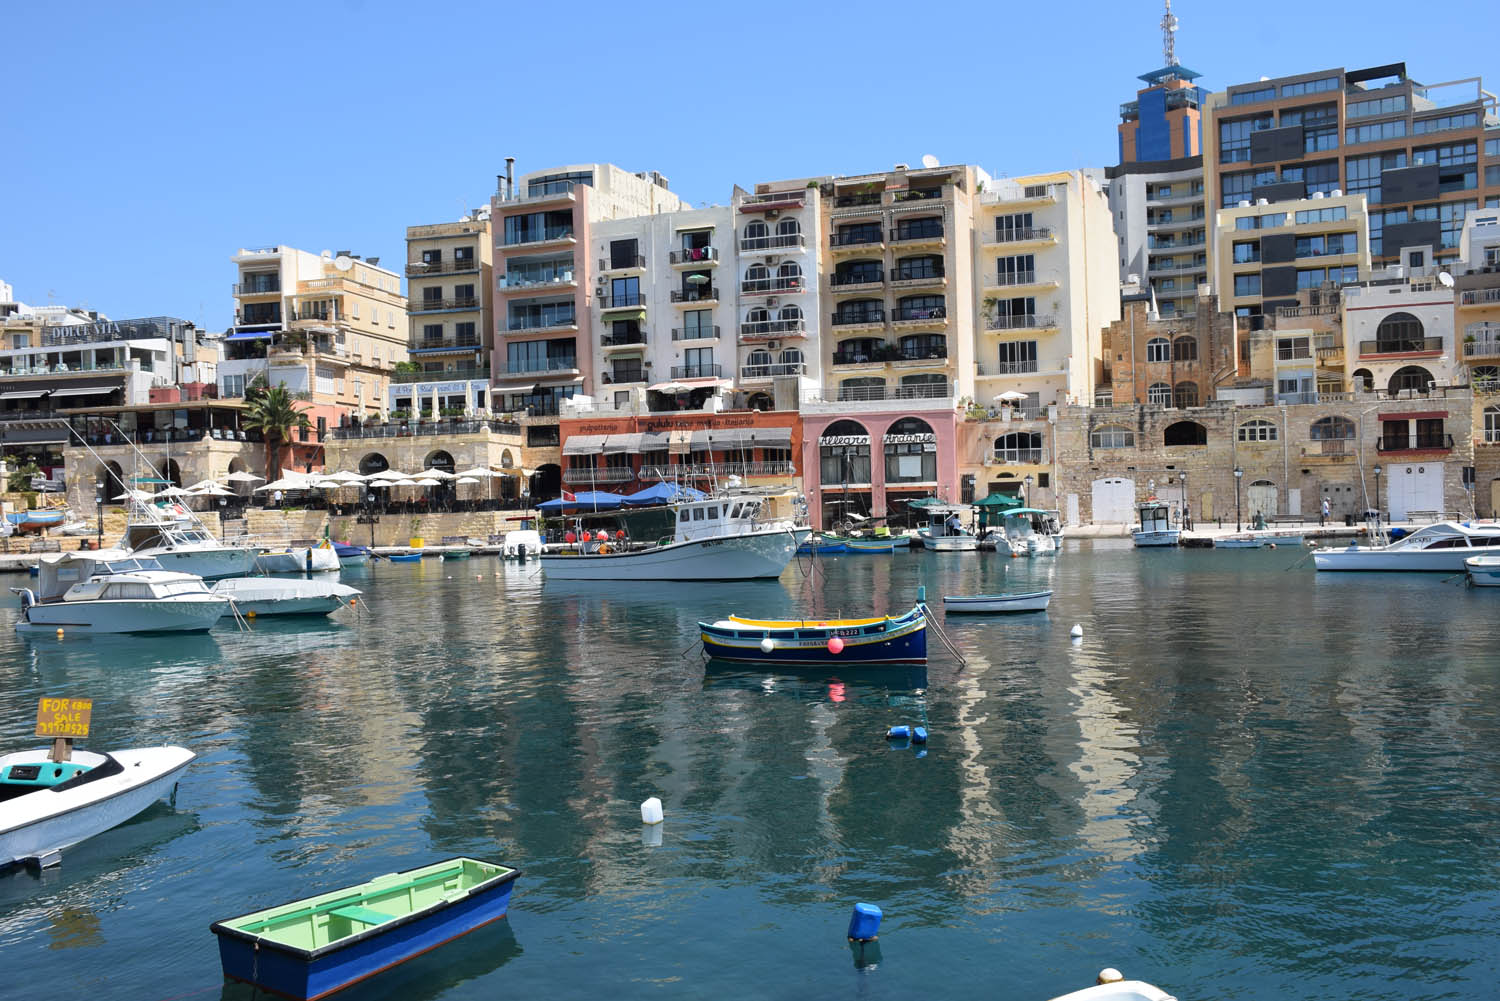 Spinola Bay - St. Julian's - Malta